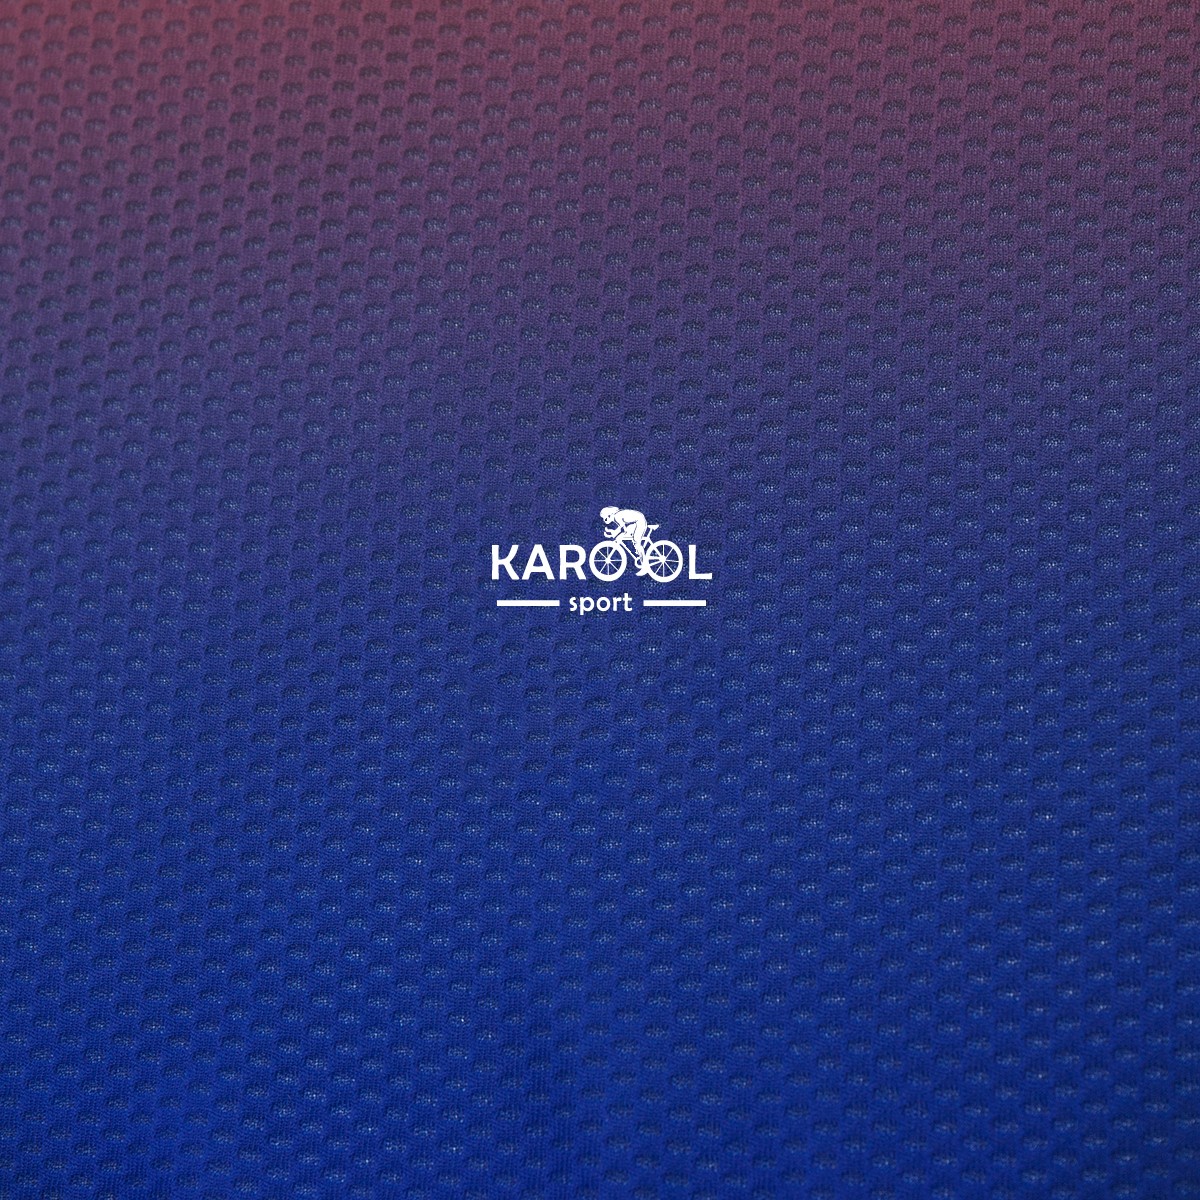 Karool custom running shirts with good price for basket ball-7